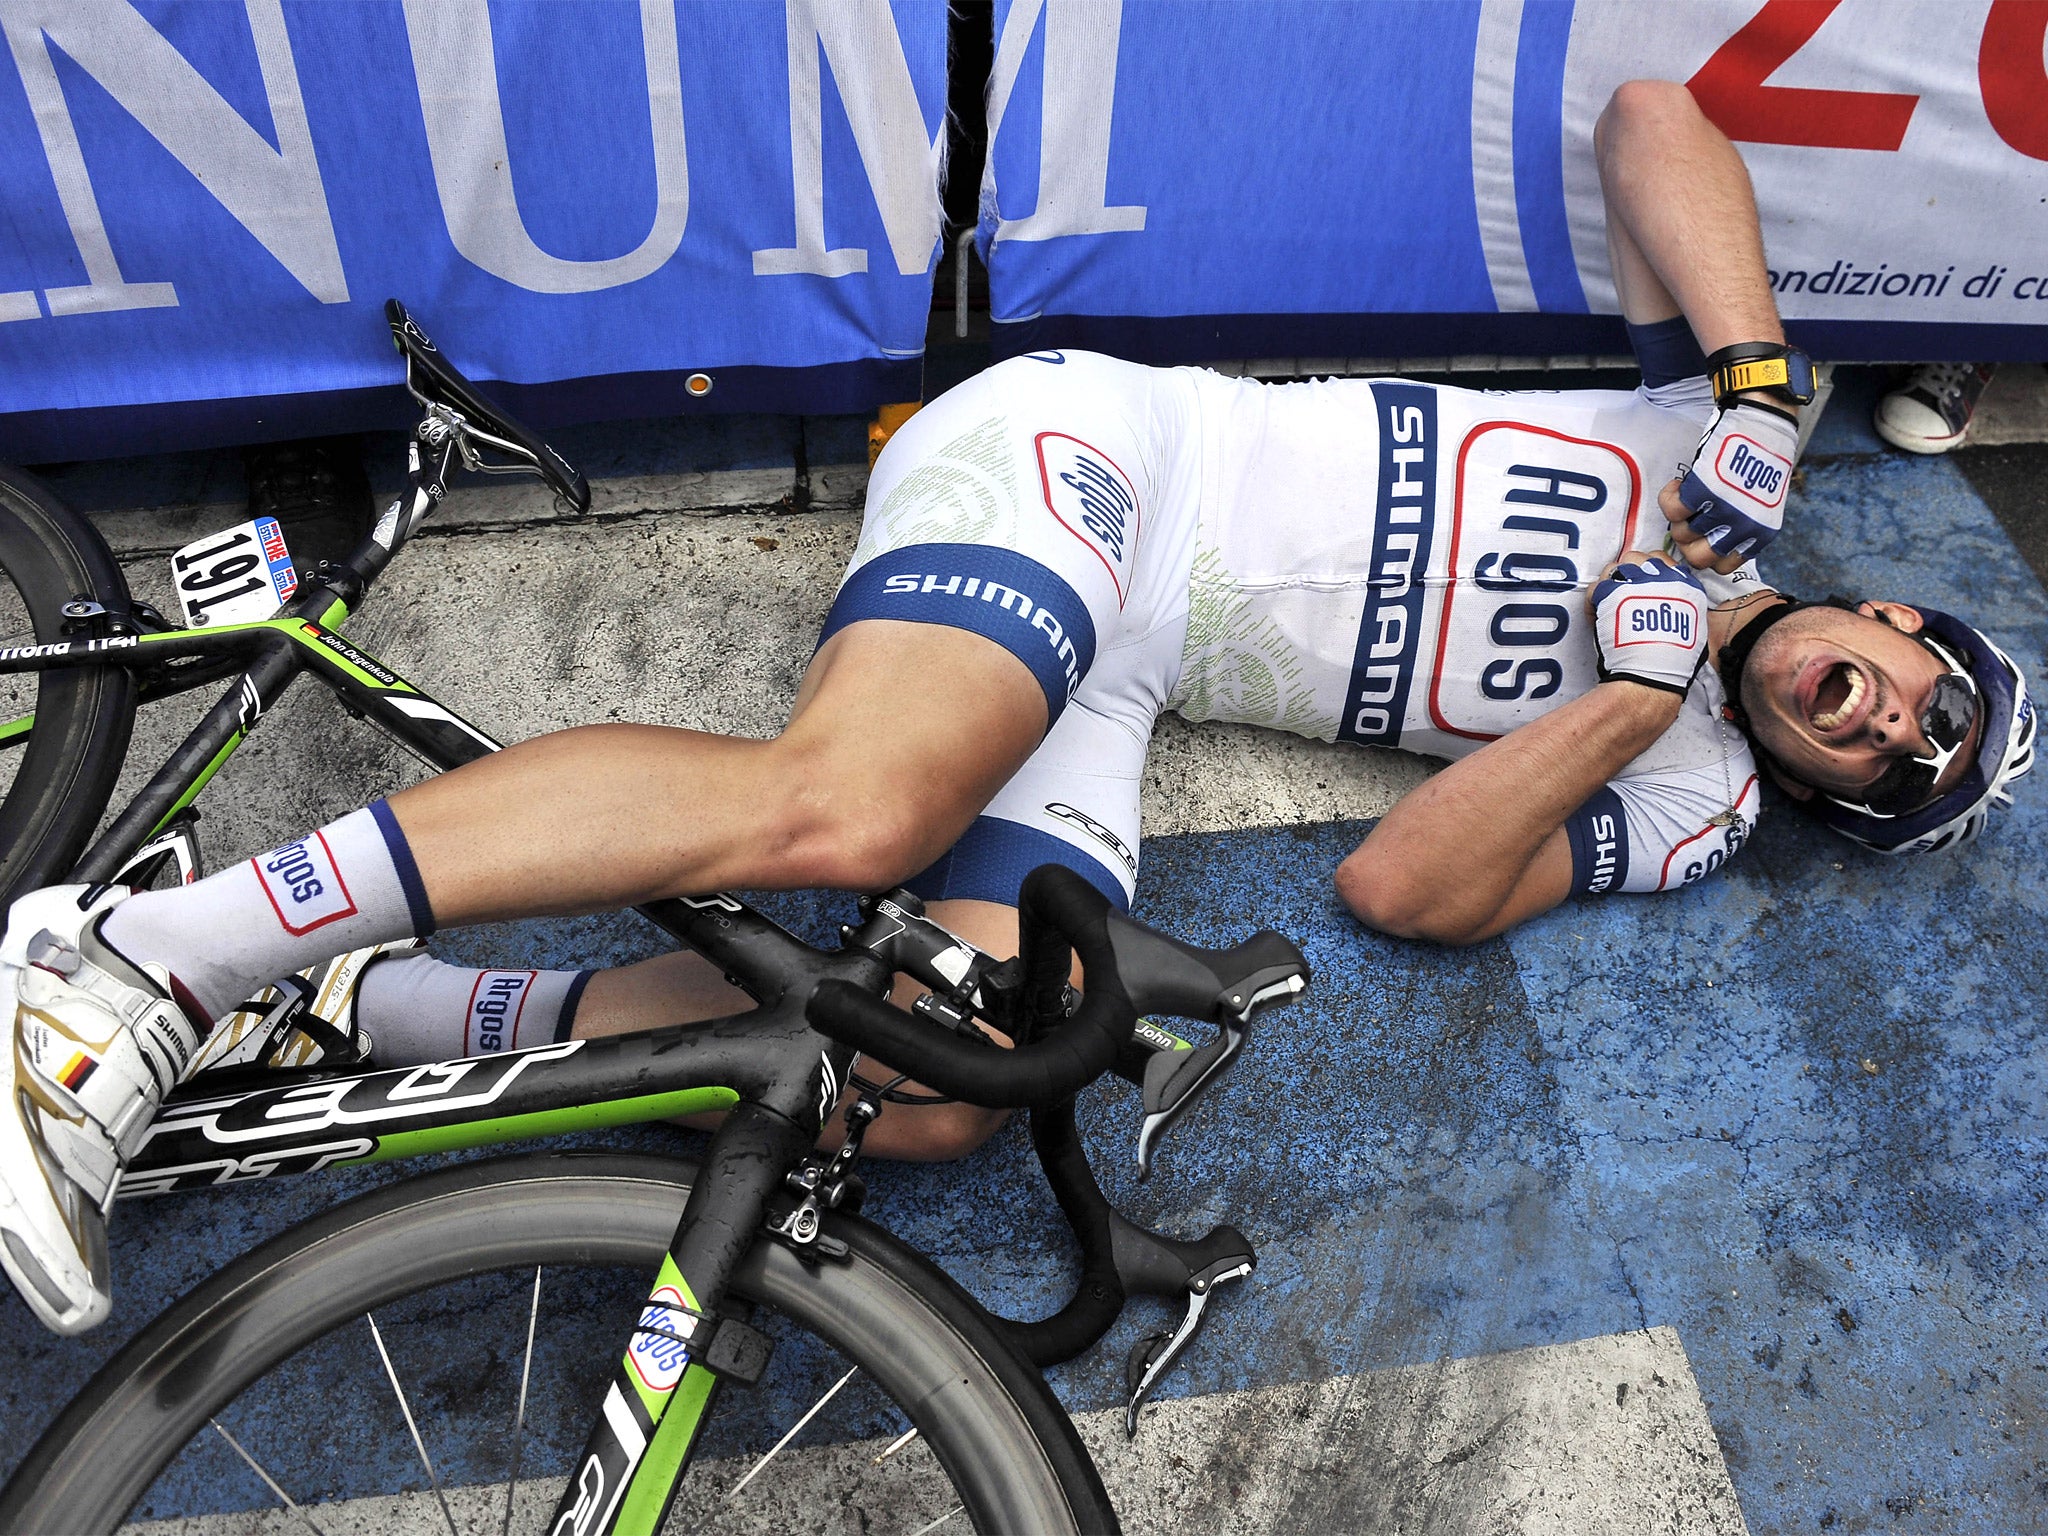 John Degenkolb lies exhausted after winning stage five yesterday